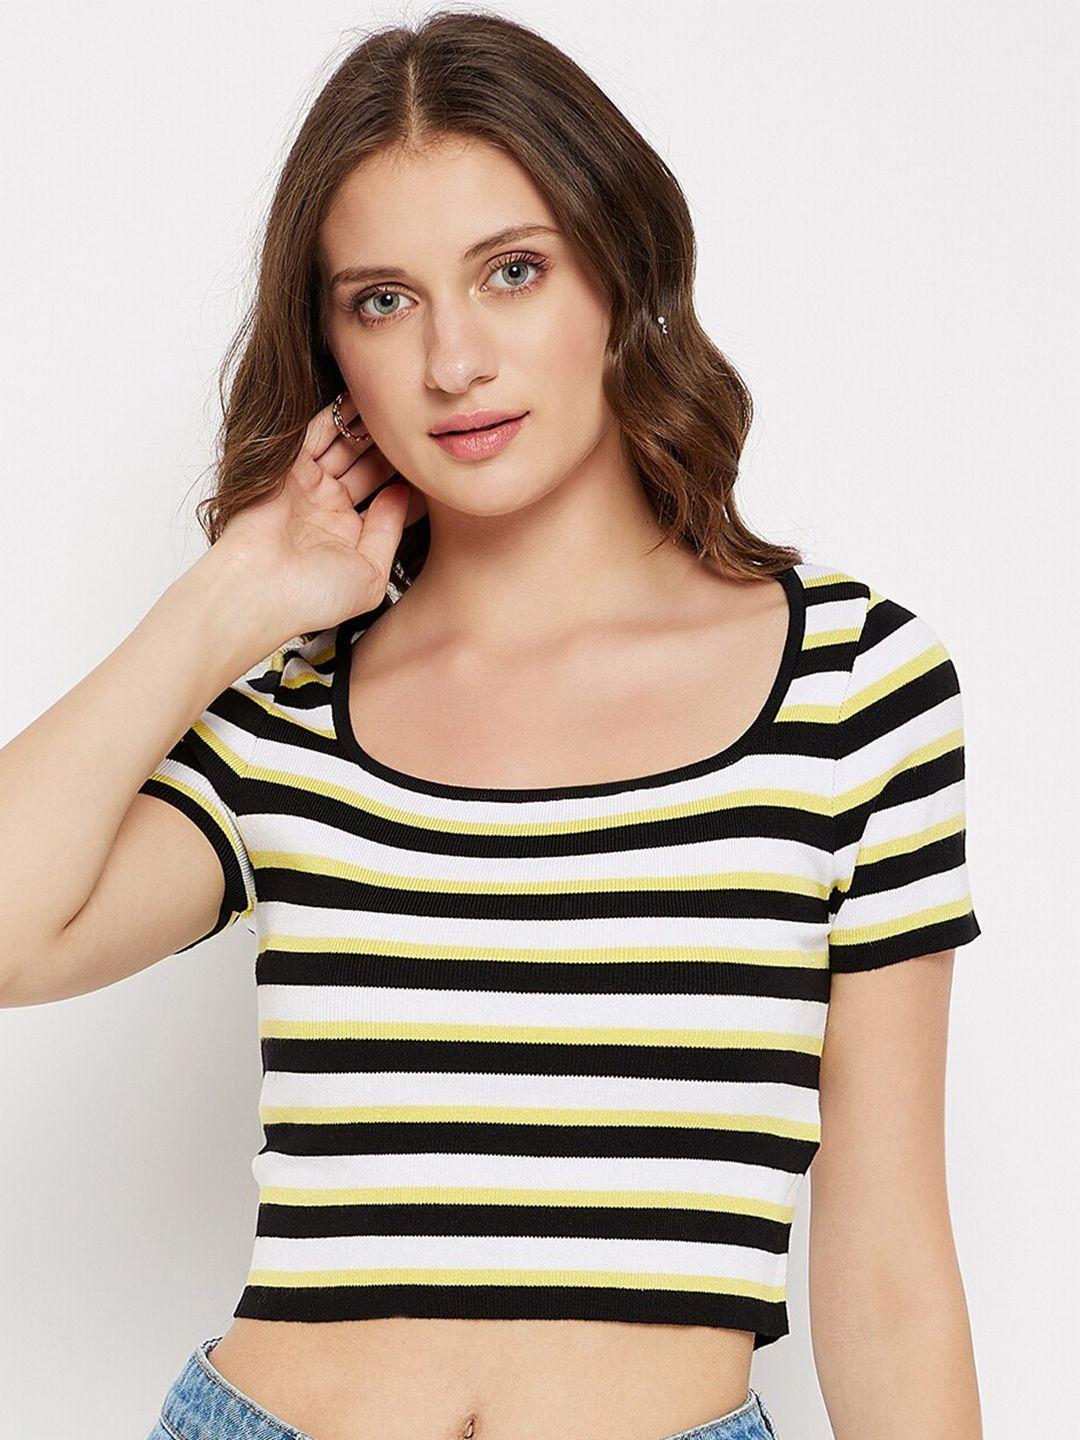 madame-horizontal-stripes-striped-crop-top